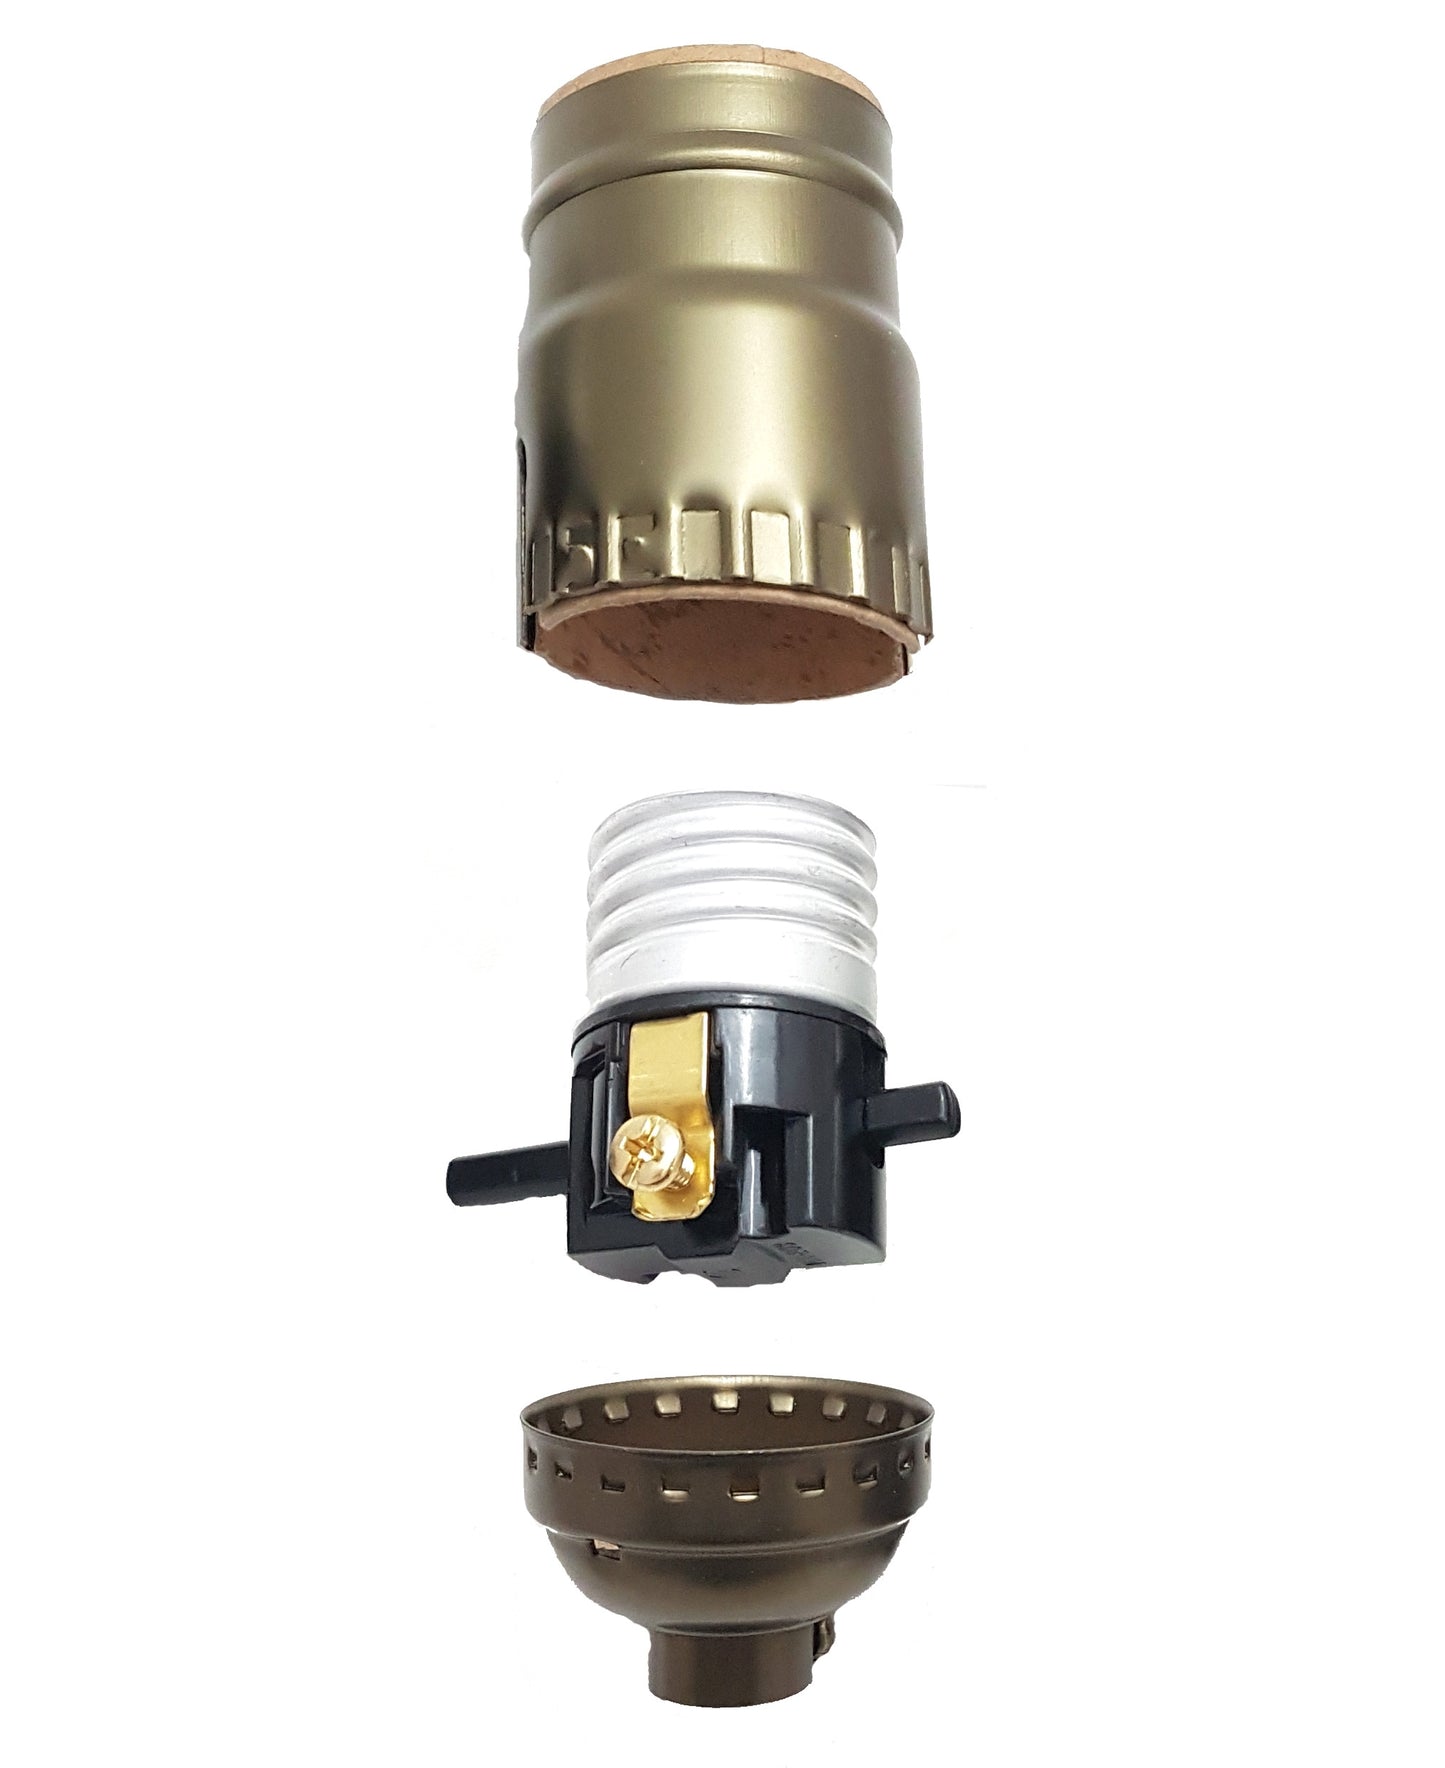 Push-Thru Medium Base Lamp Socket with Antique Brass Finish